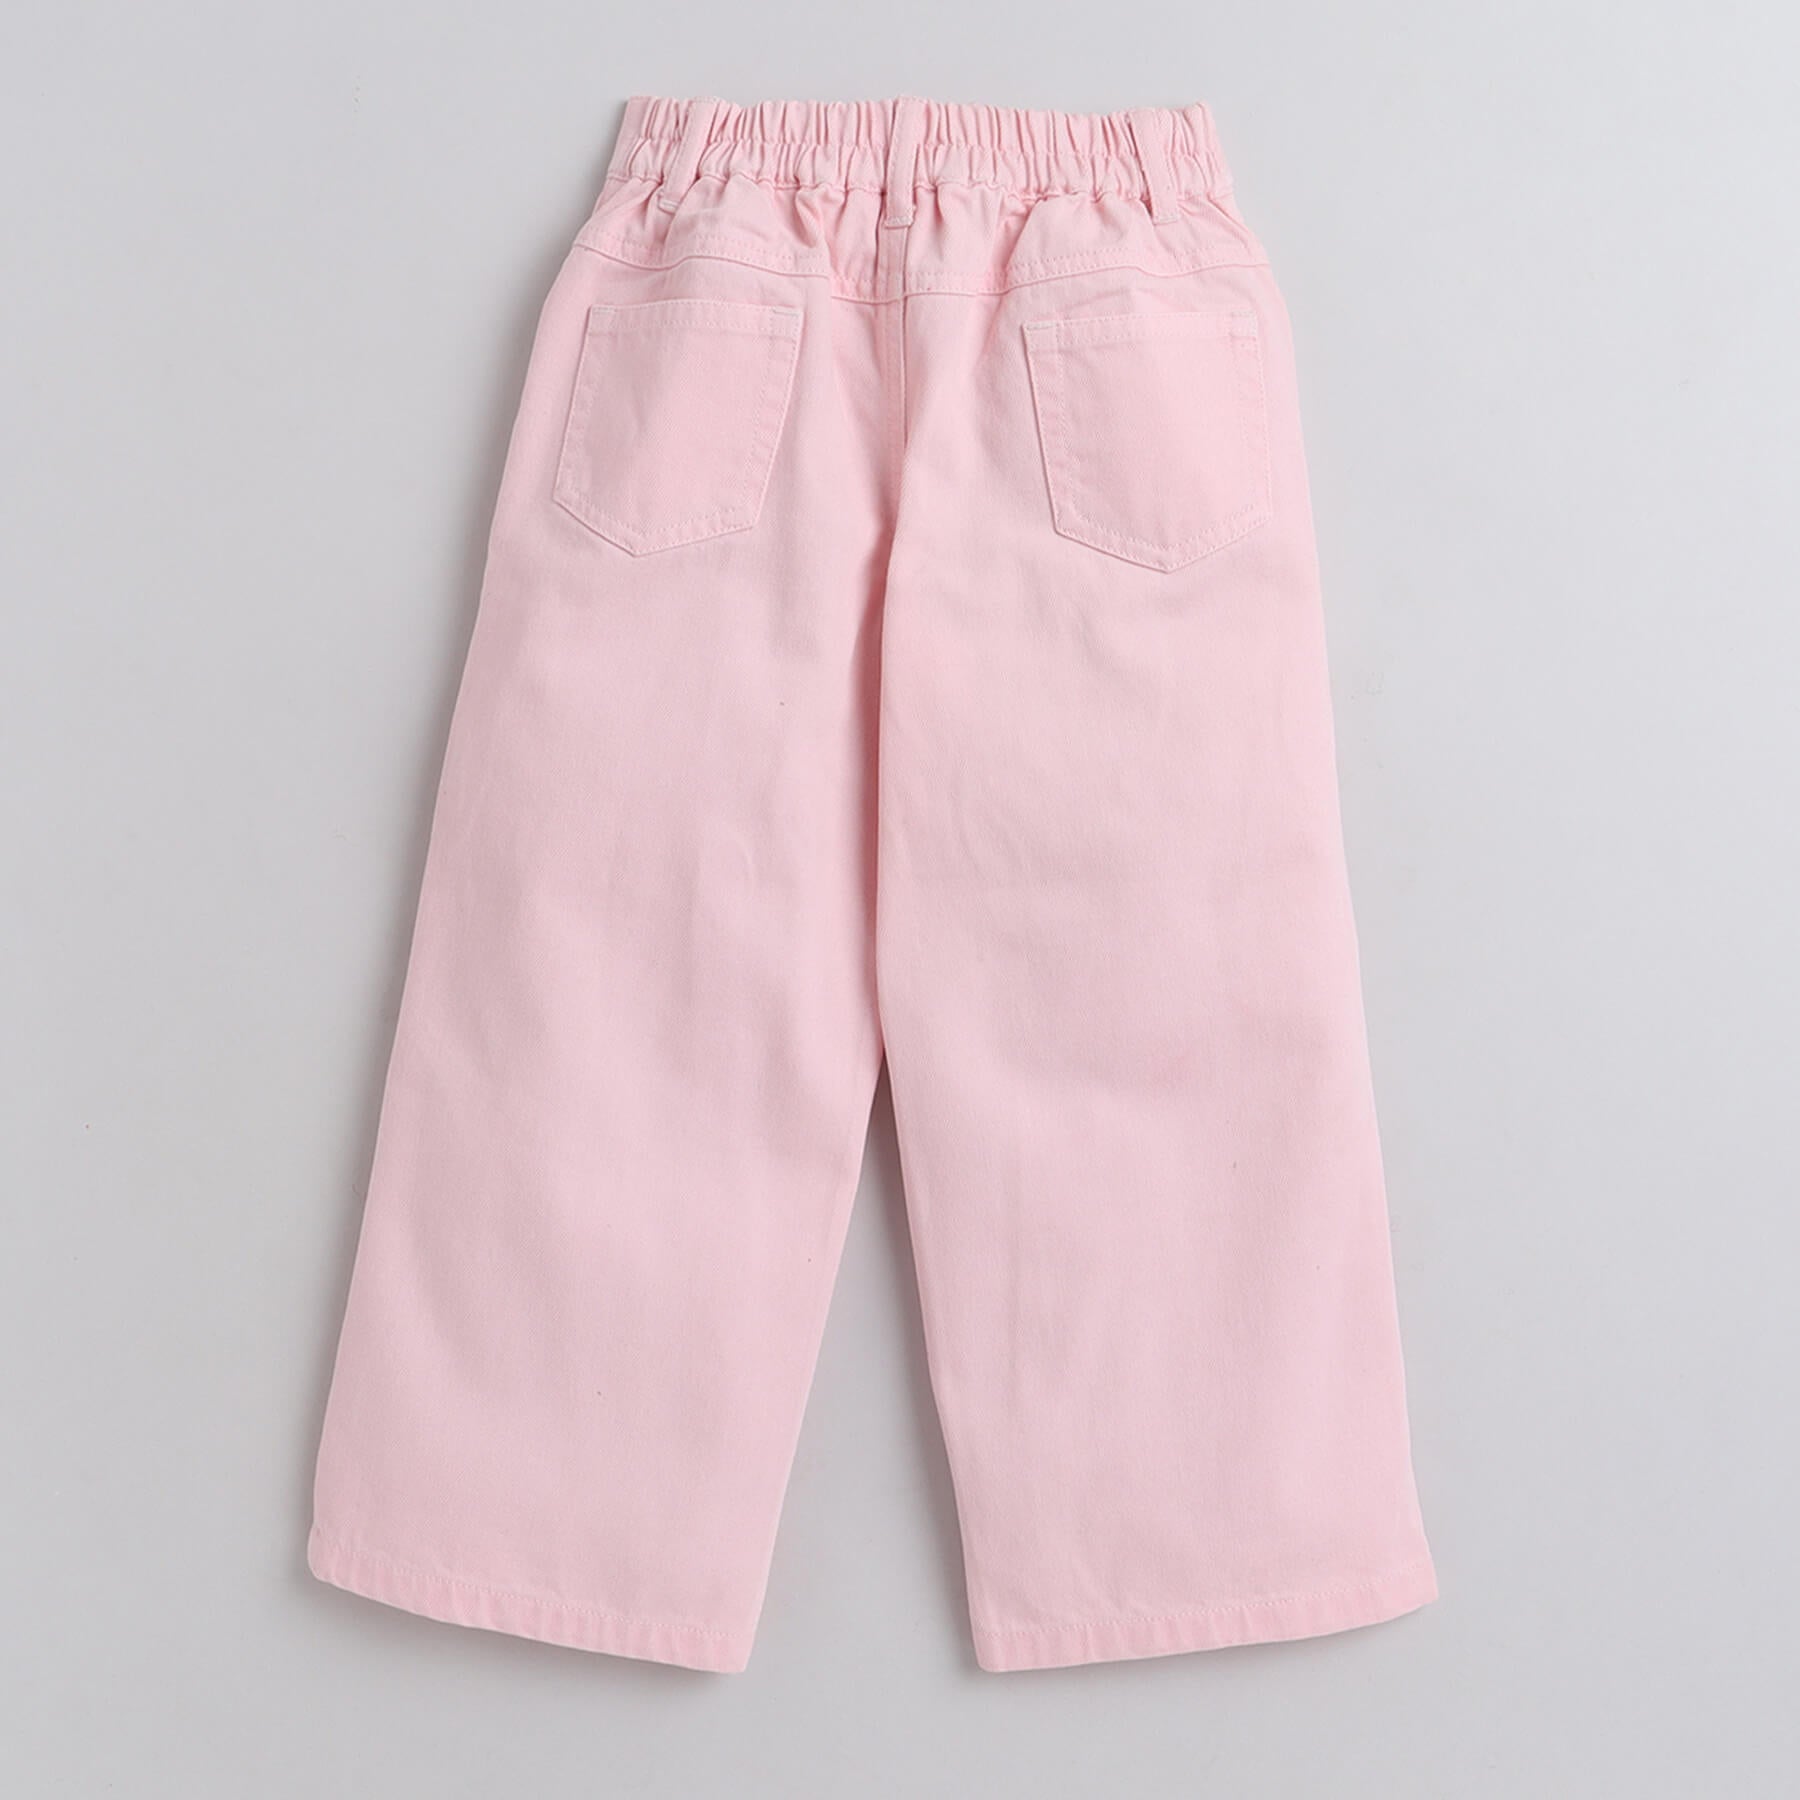 pink wide leg cotton jeans